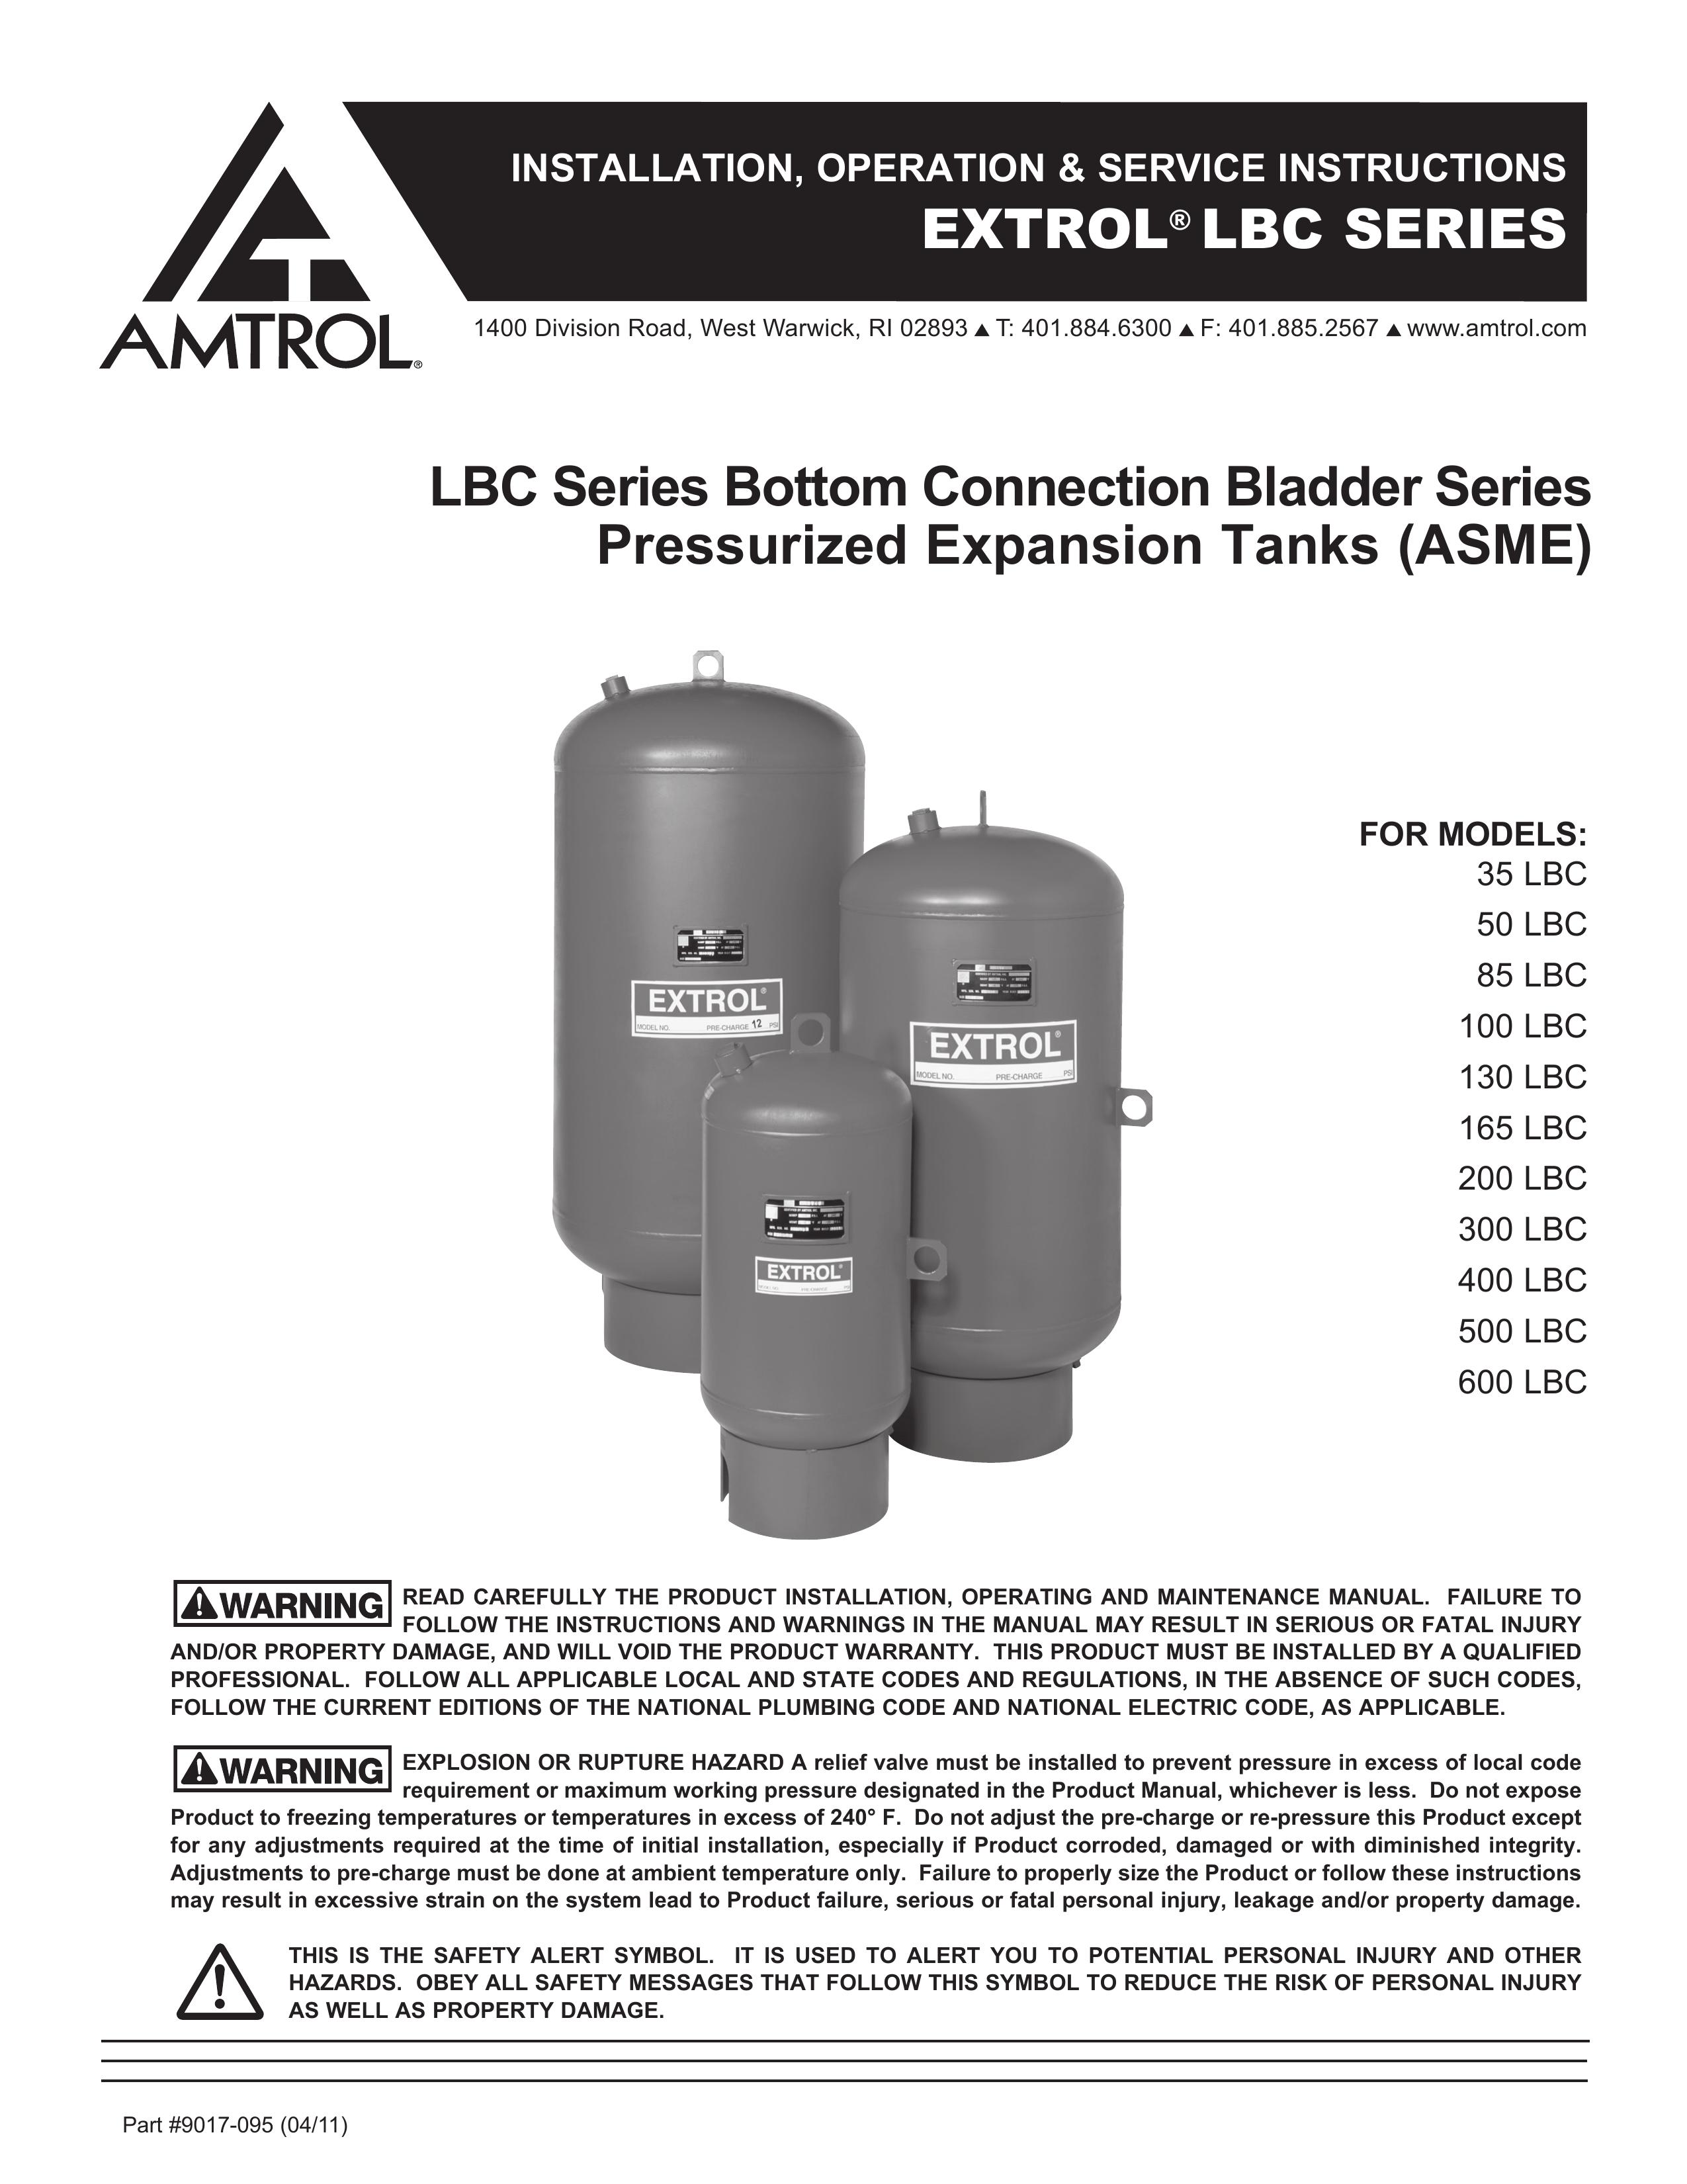 Amtrol 200 LBC Oxygen Equipment User Manual